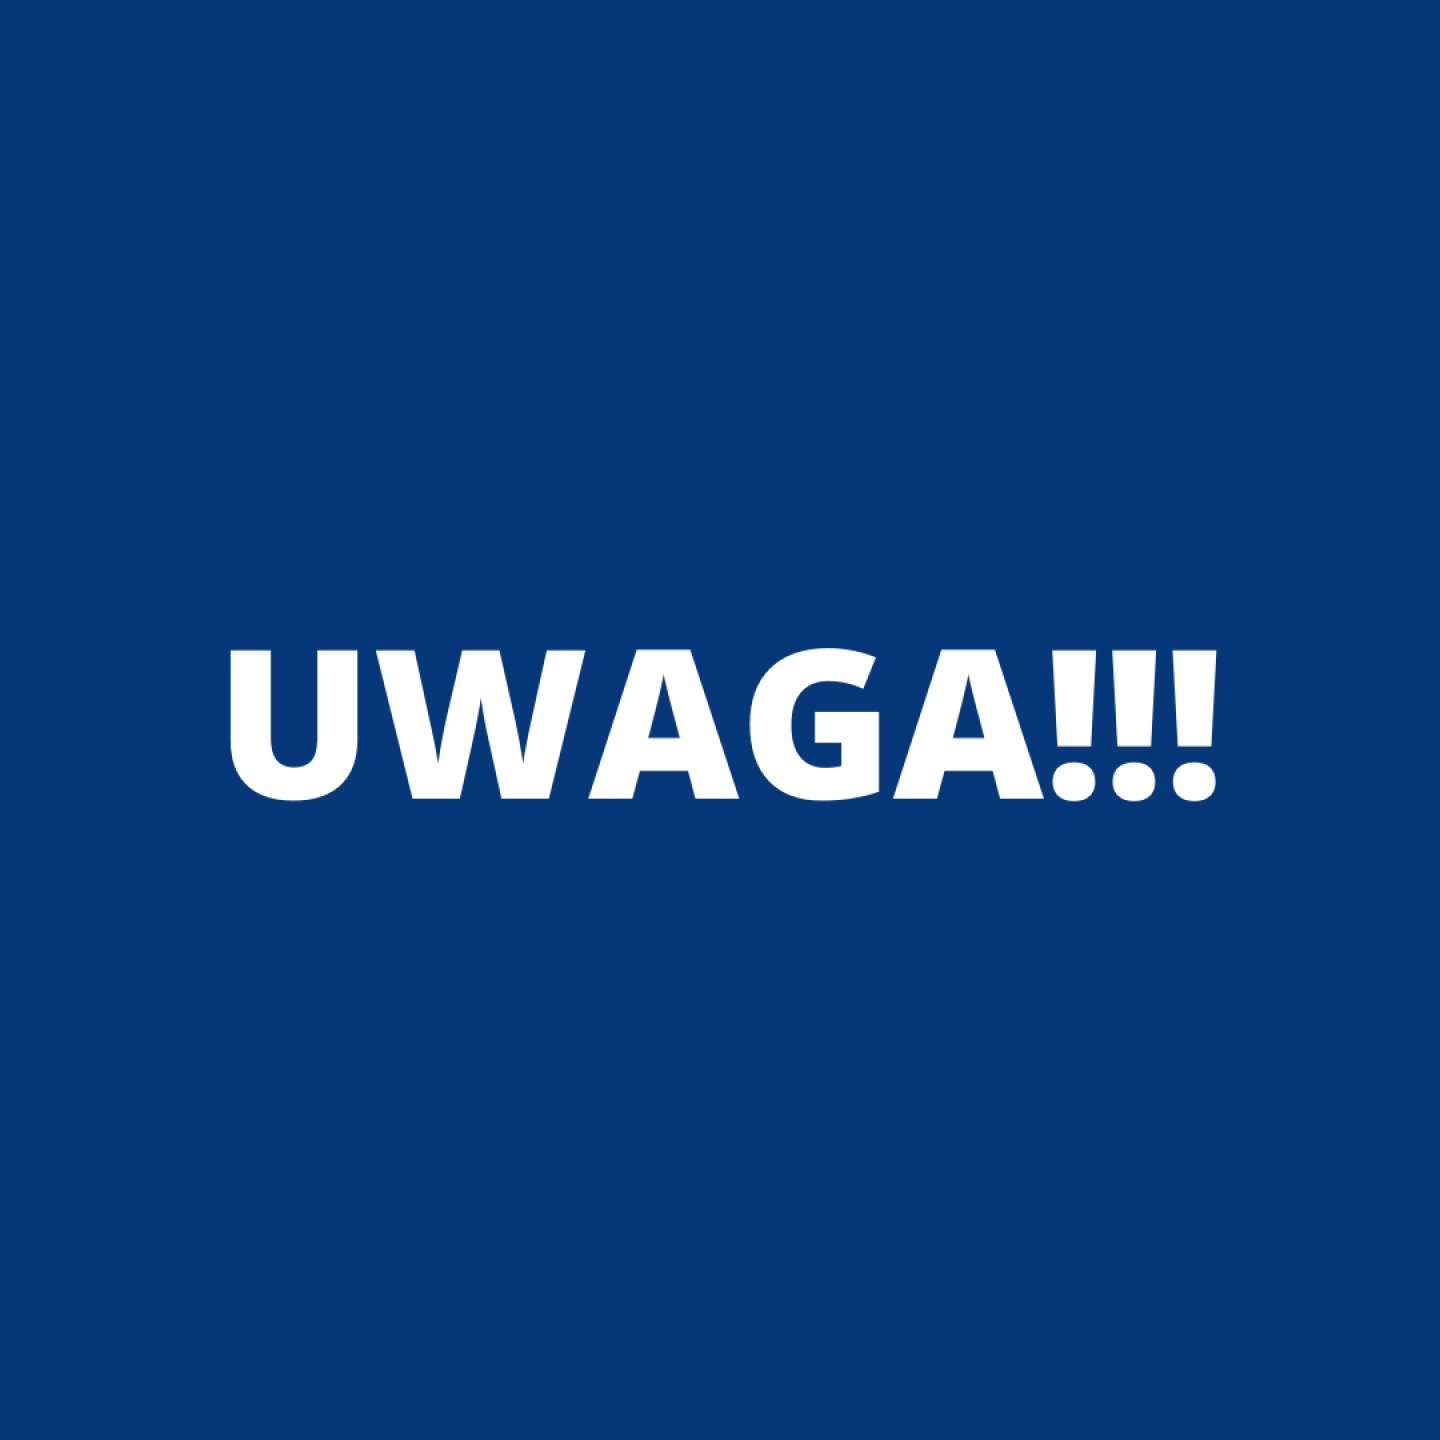 UWAGA!!!